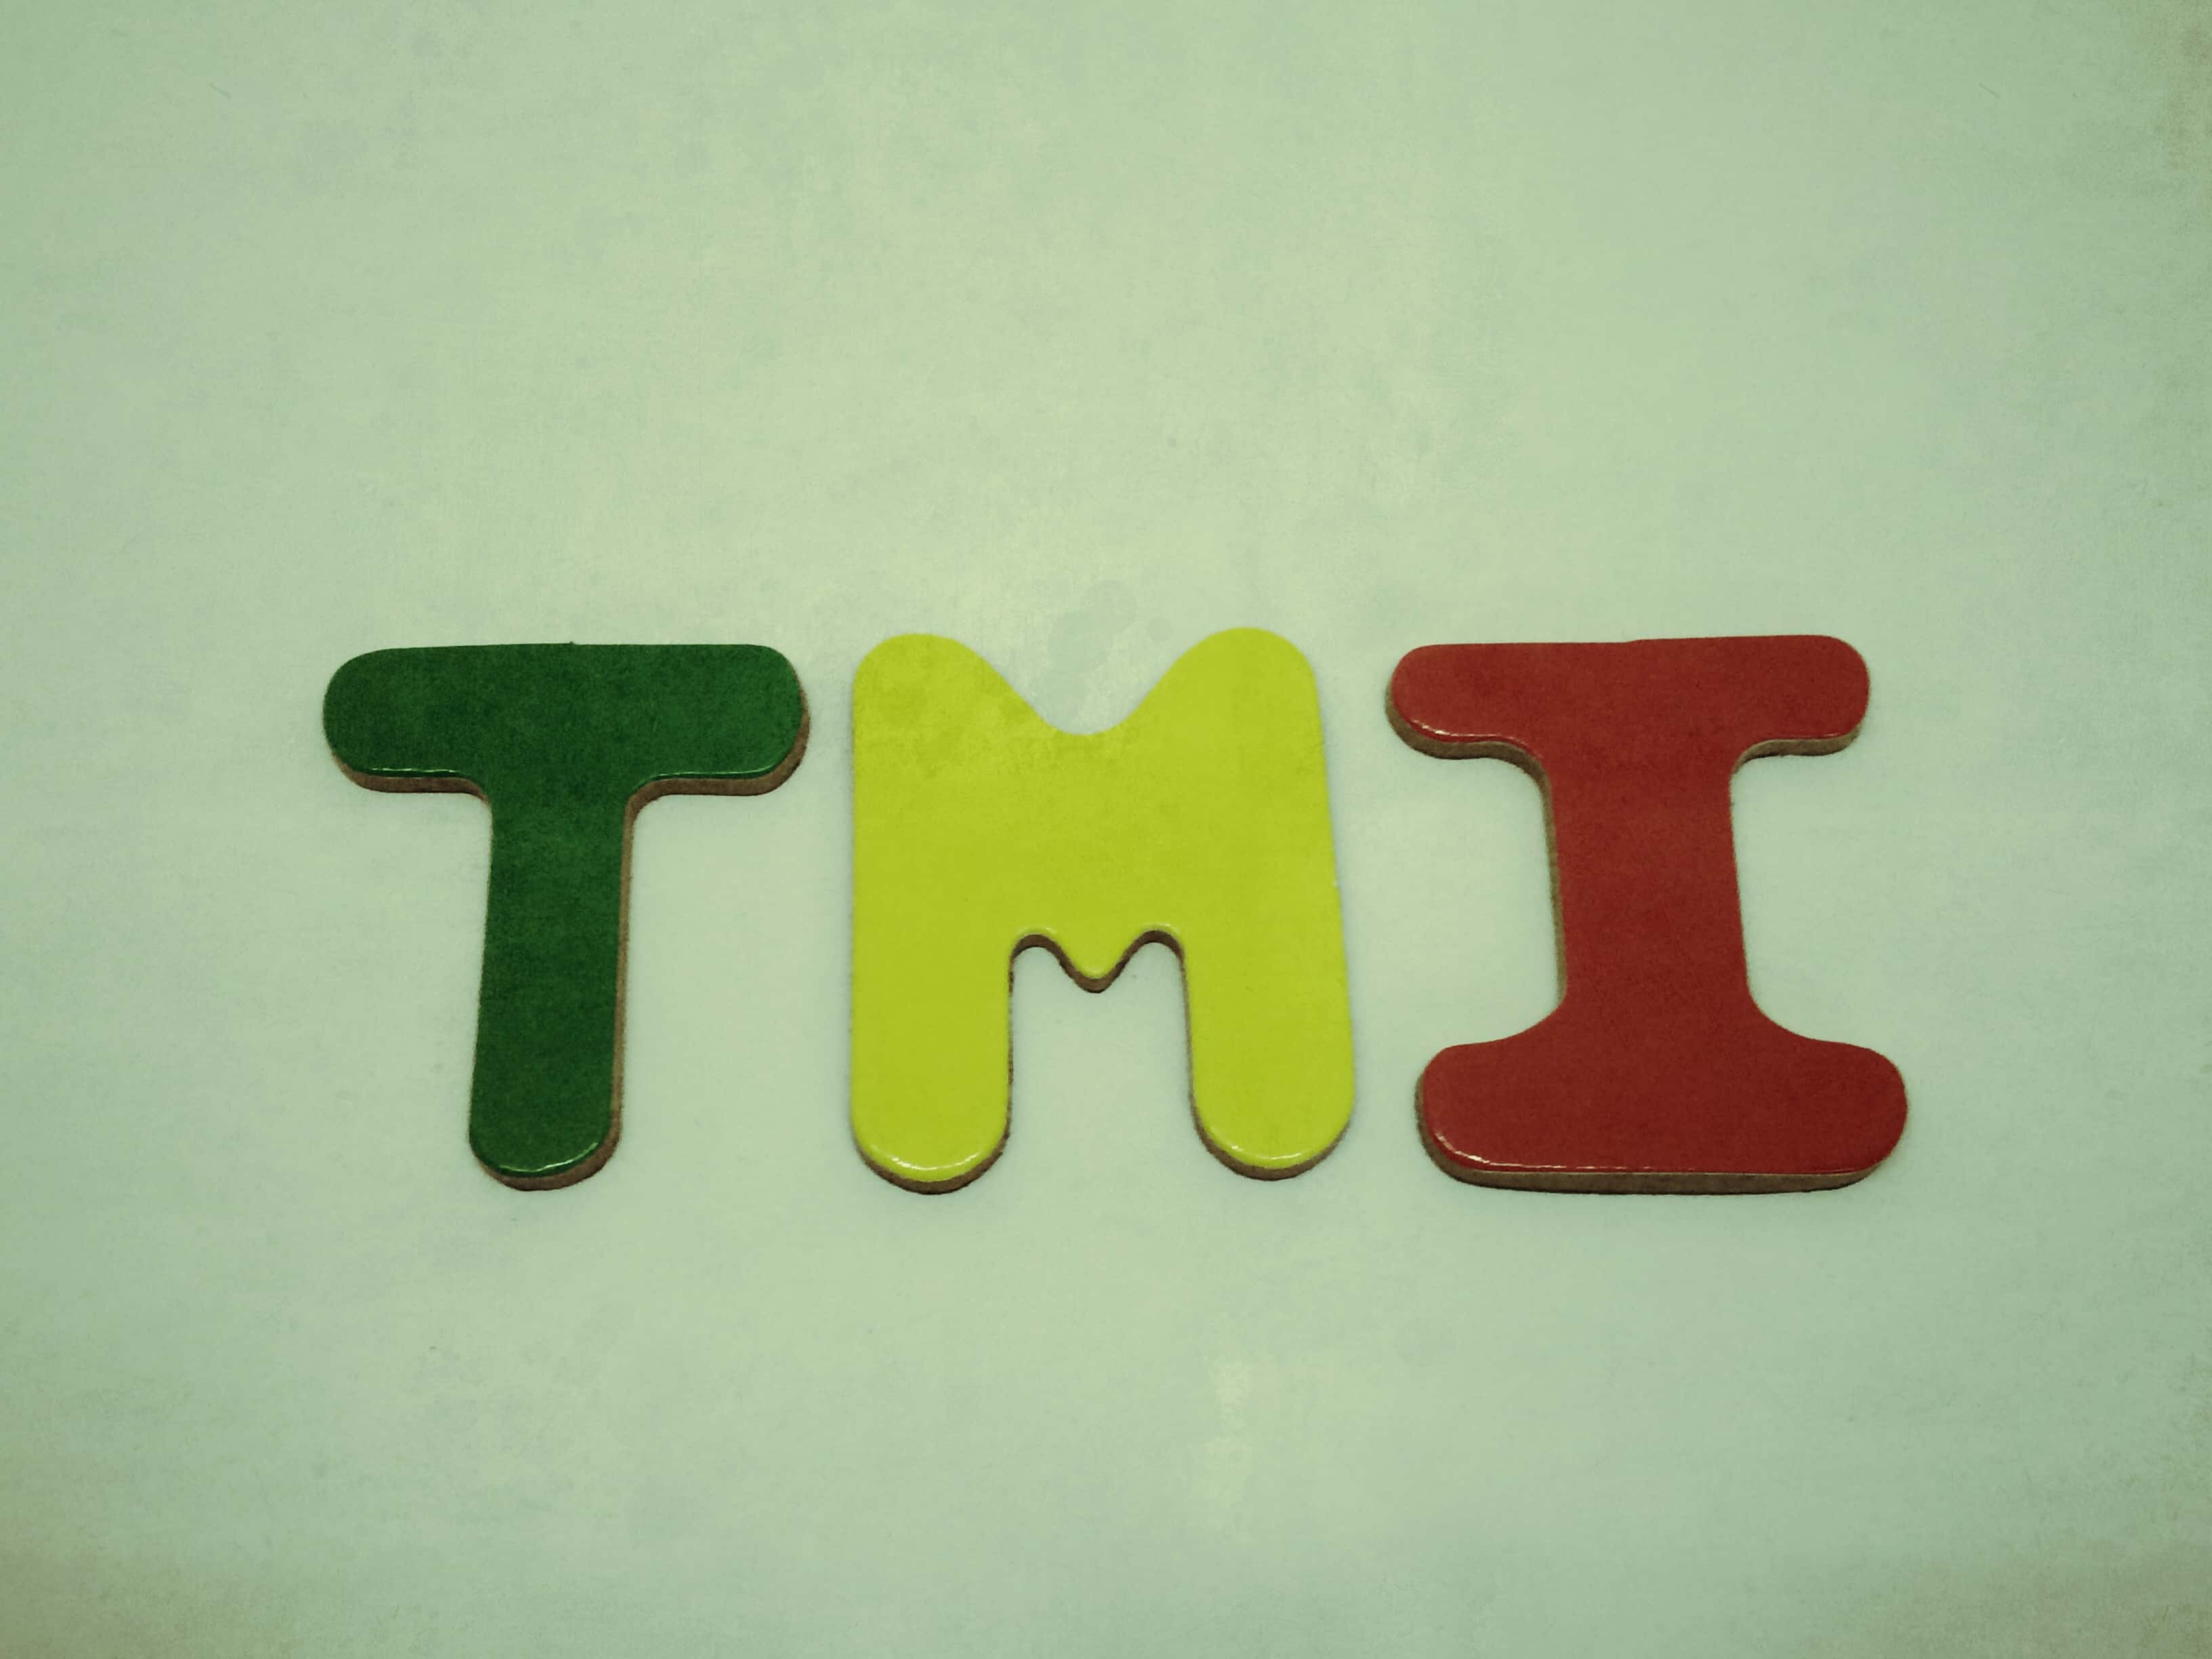 TMI (Too Much Information)